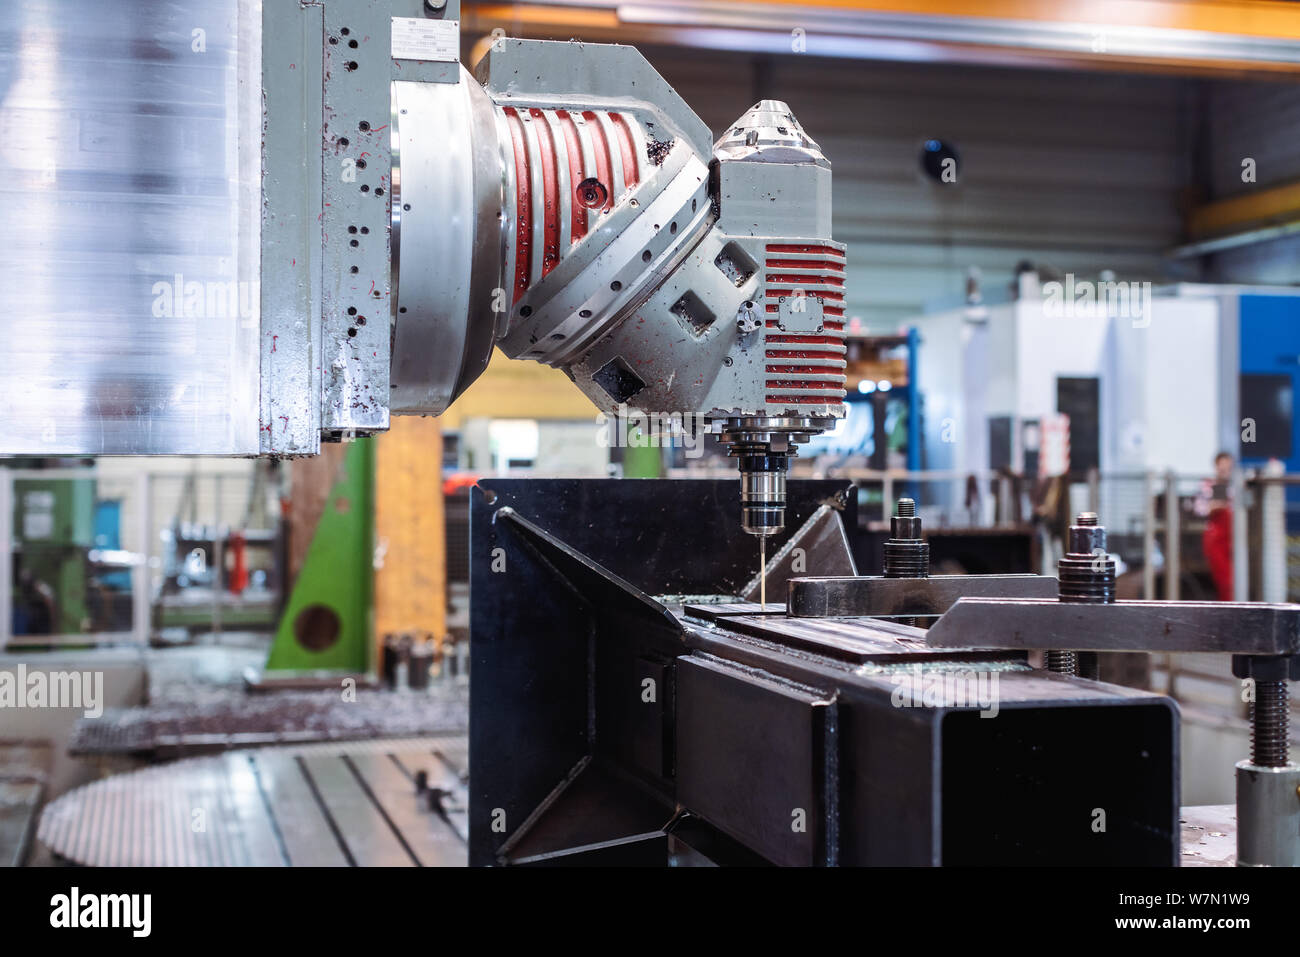 Milling machine robot working on workpiece Stock Photo